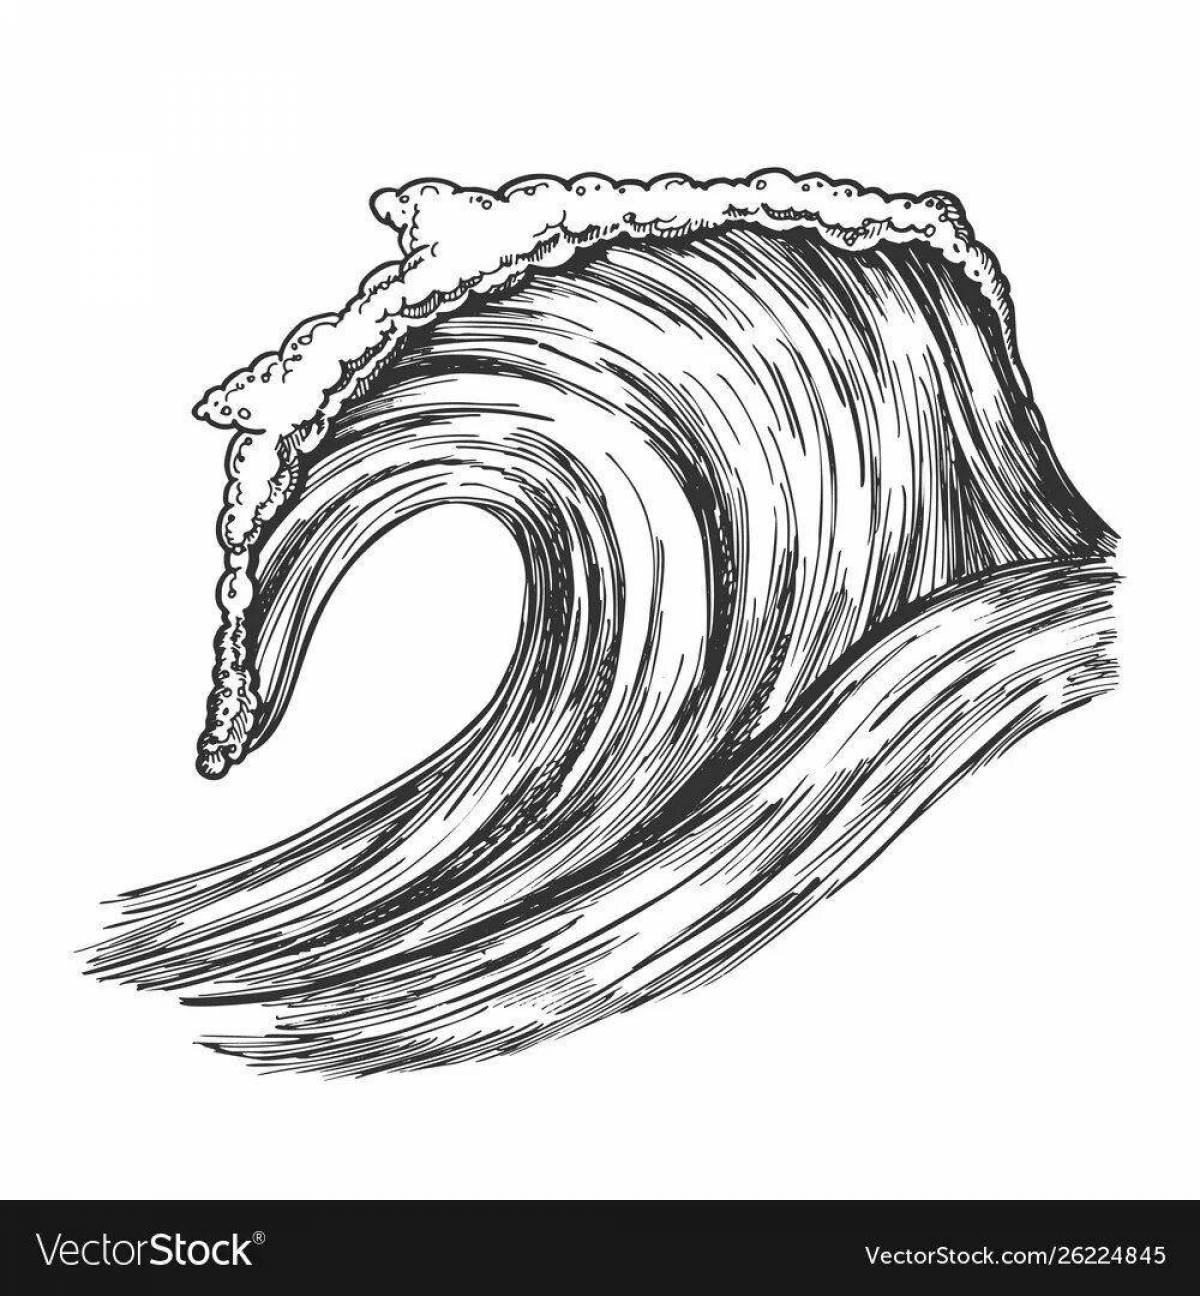 Charming tsunami coloring book